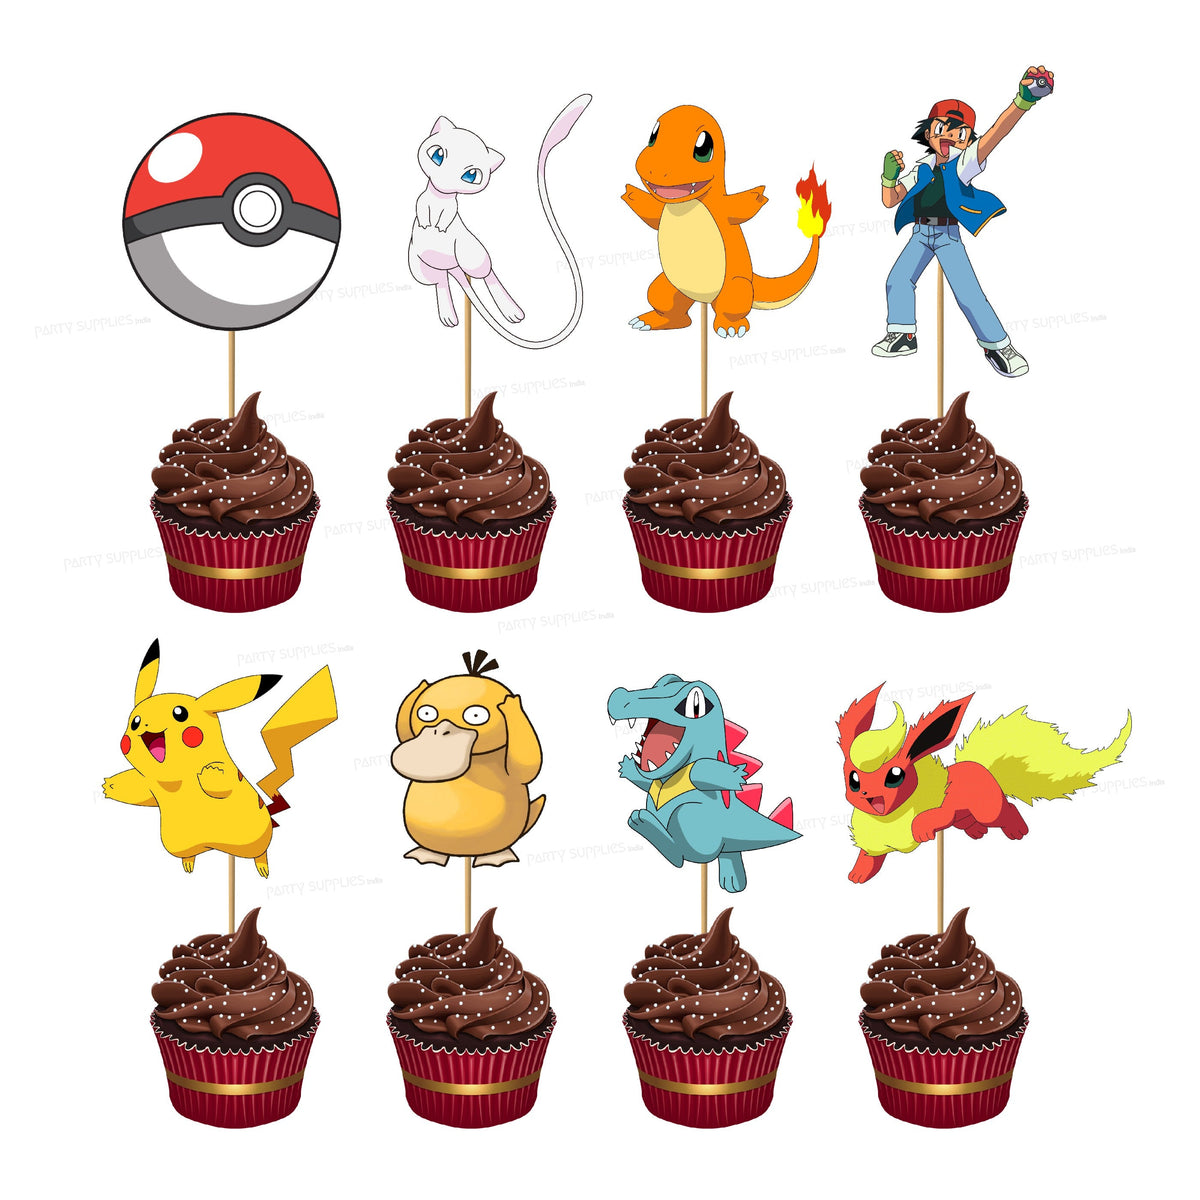 PSI Pokemon Personalized  Theme Cup Cake Topper